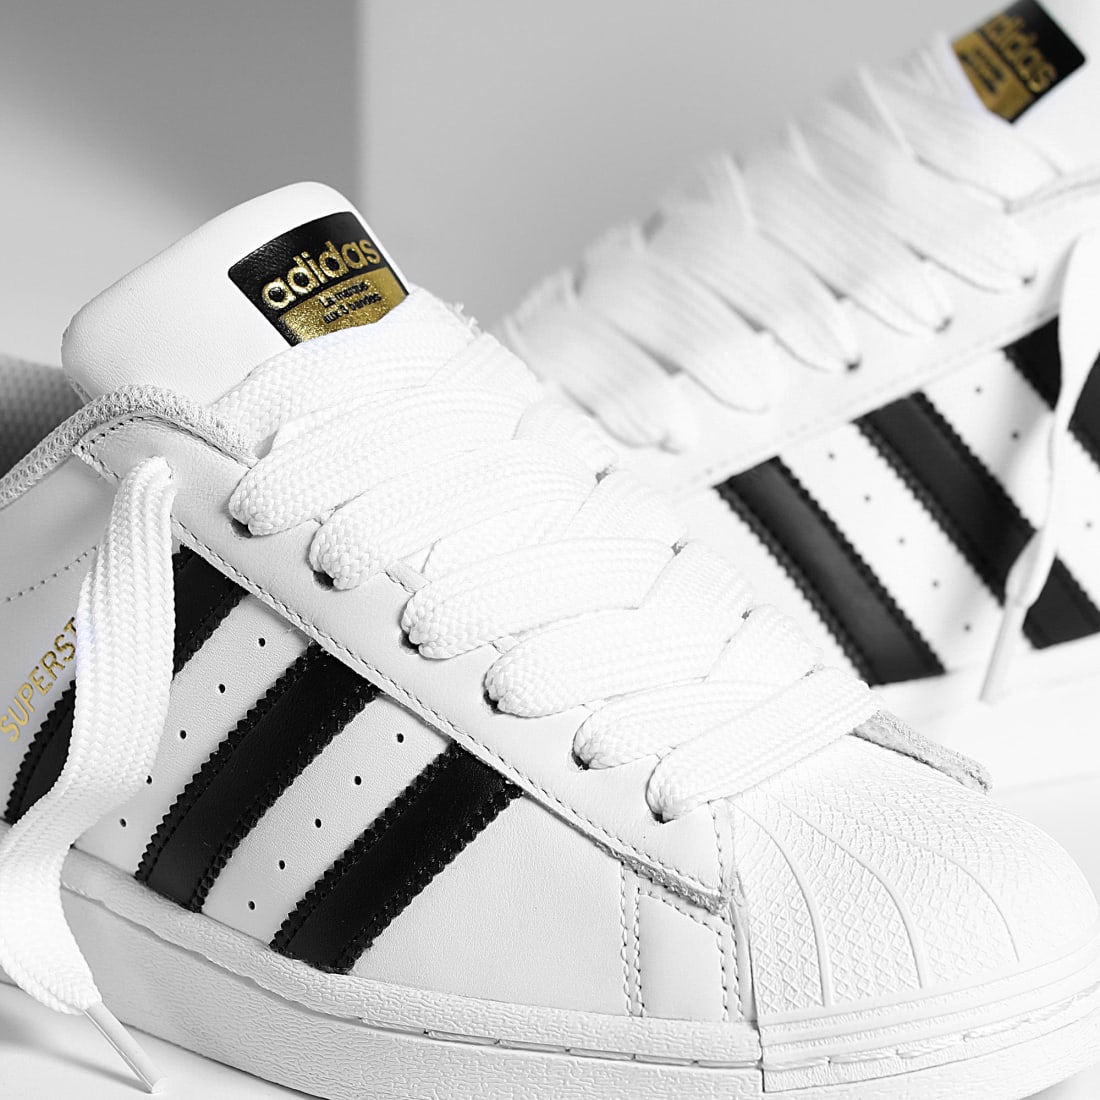 Adidas Originals - Superstar - Baskets sans lacets - Blanc